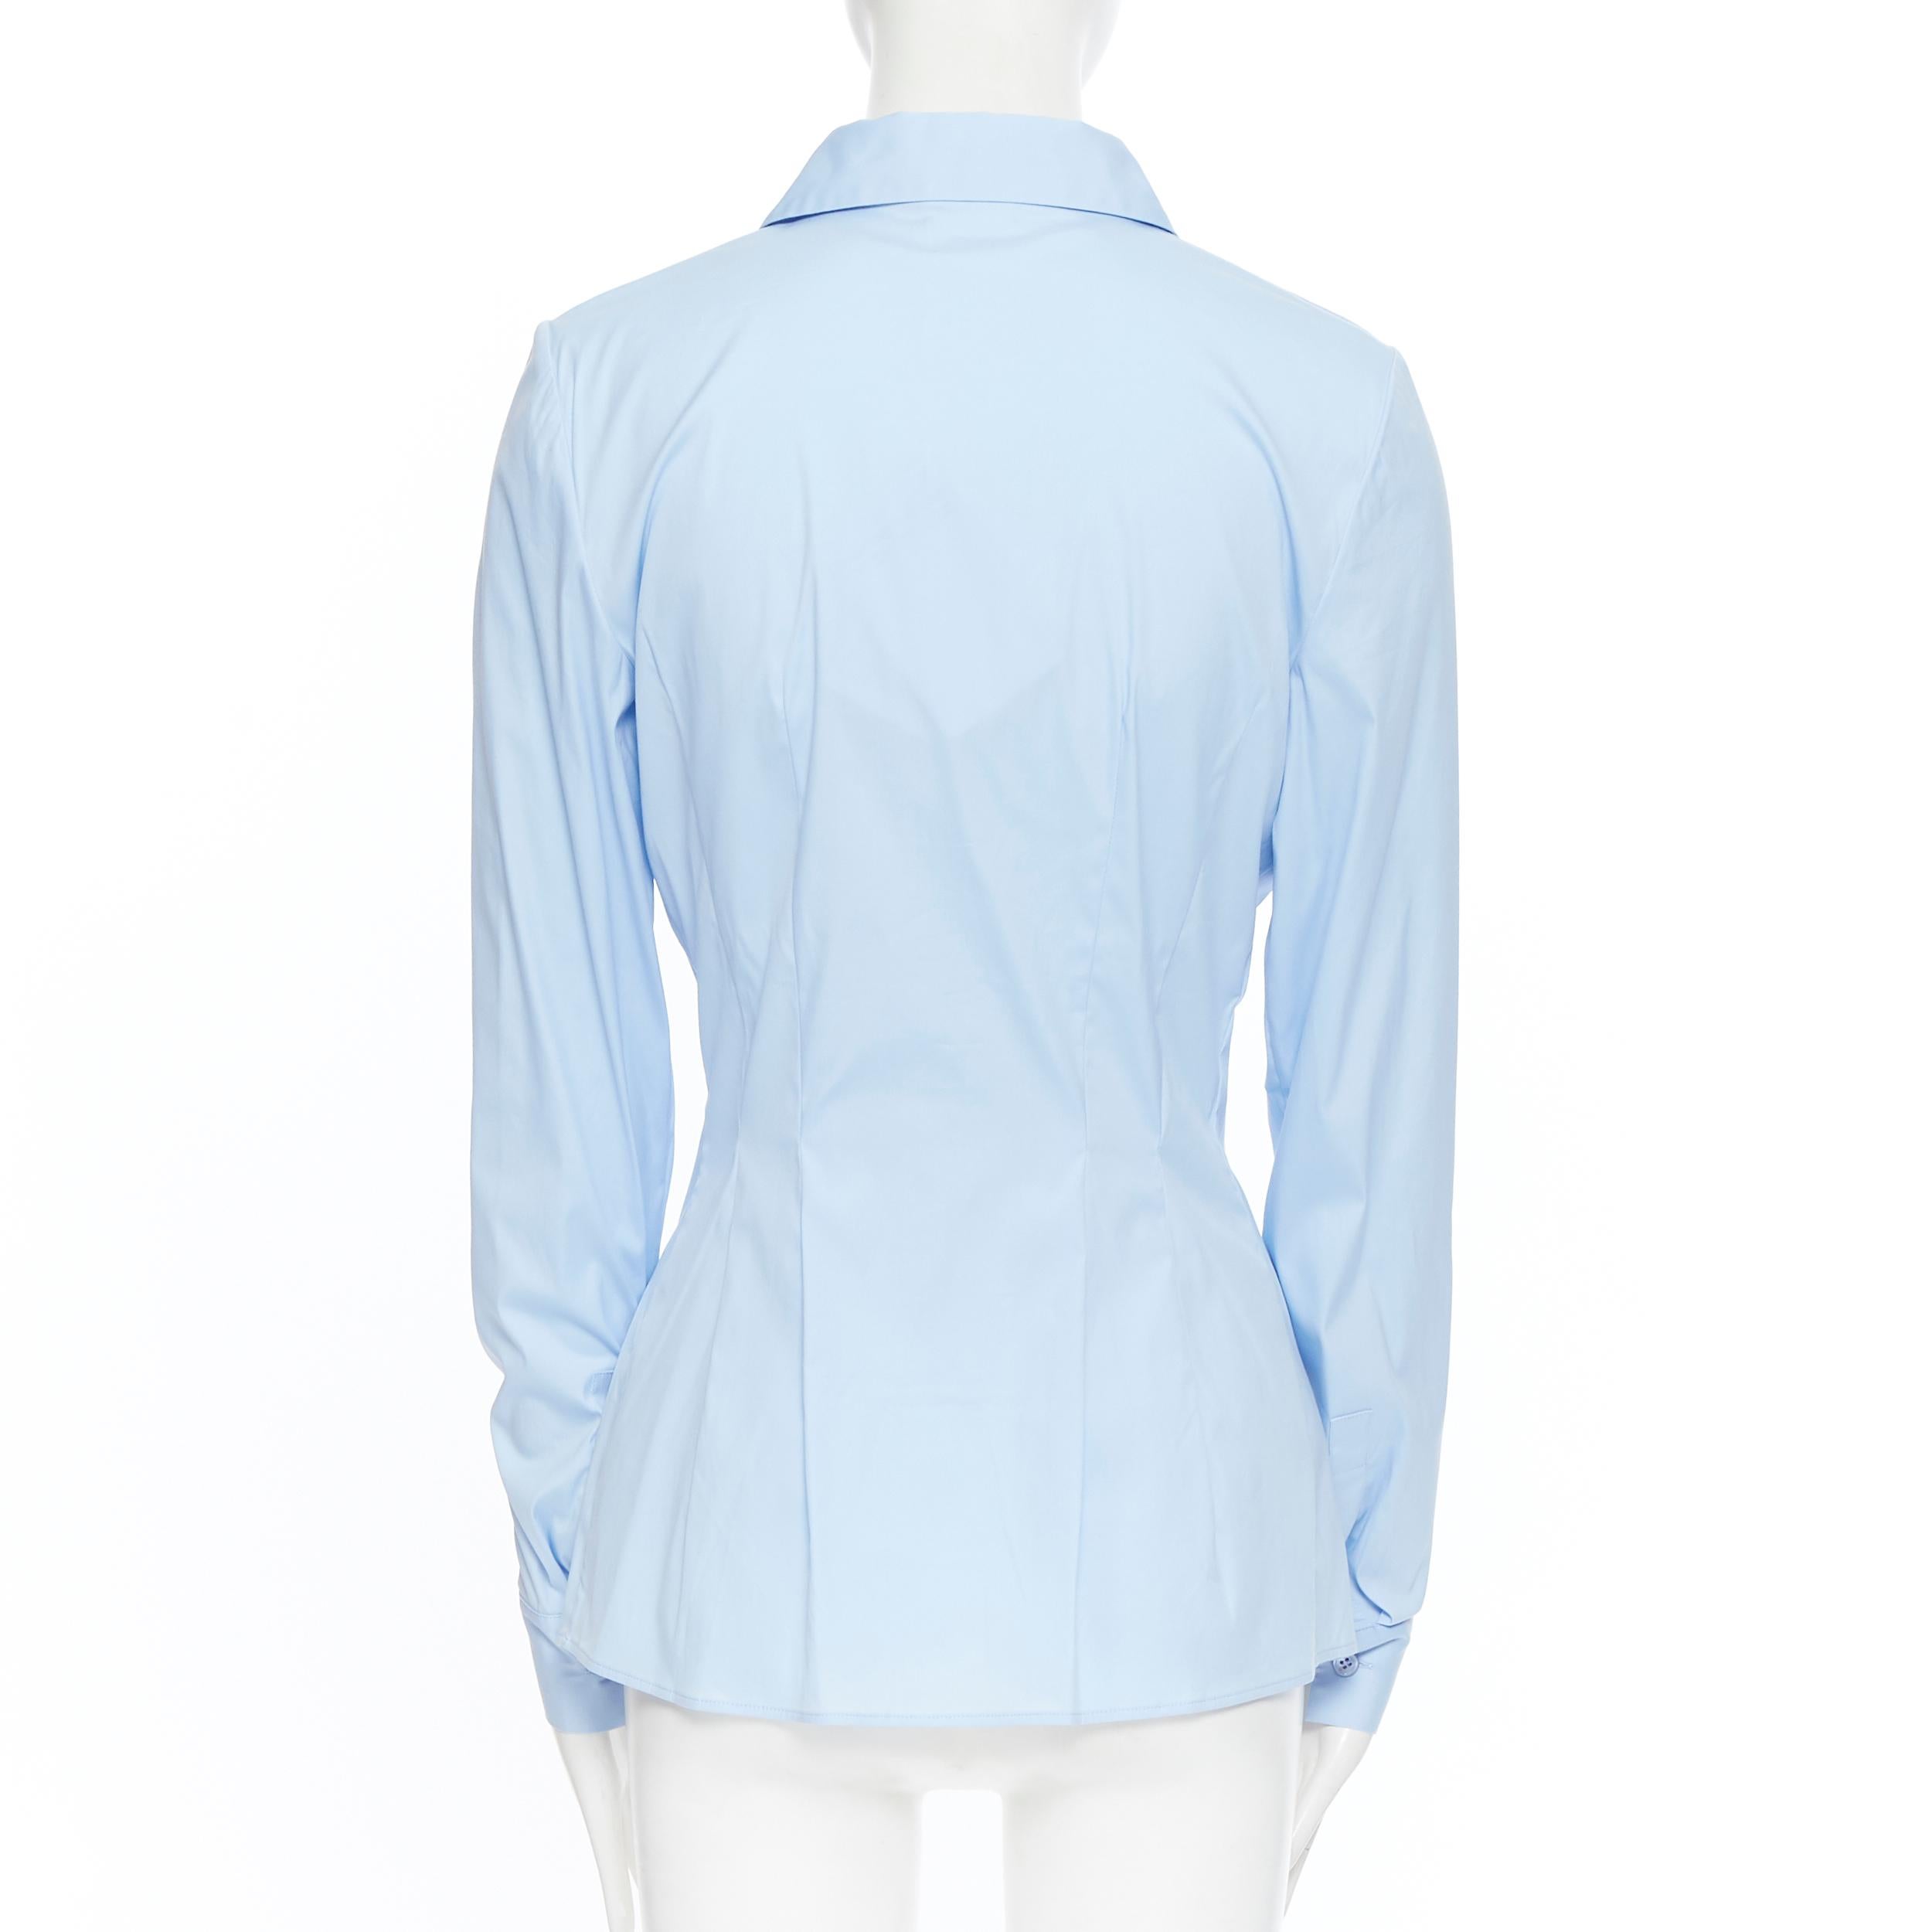 Blue new LA PERLA SS17 Runway Corset bustier light blue stretch cotton shirt IT42 B